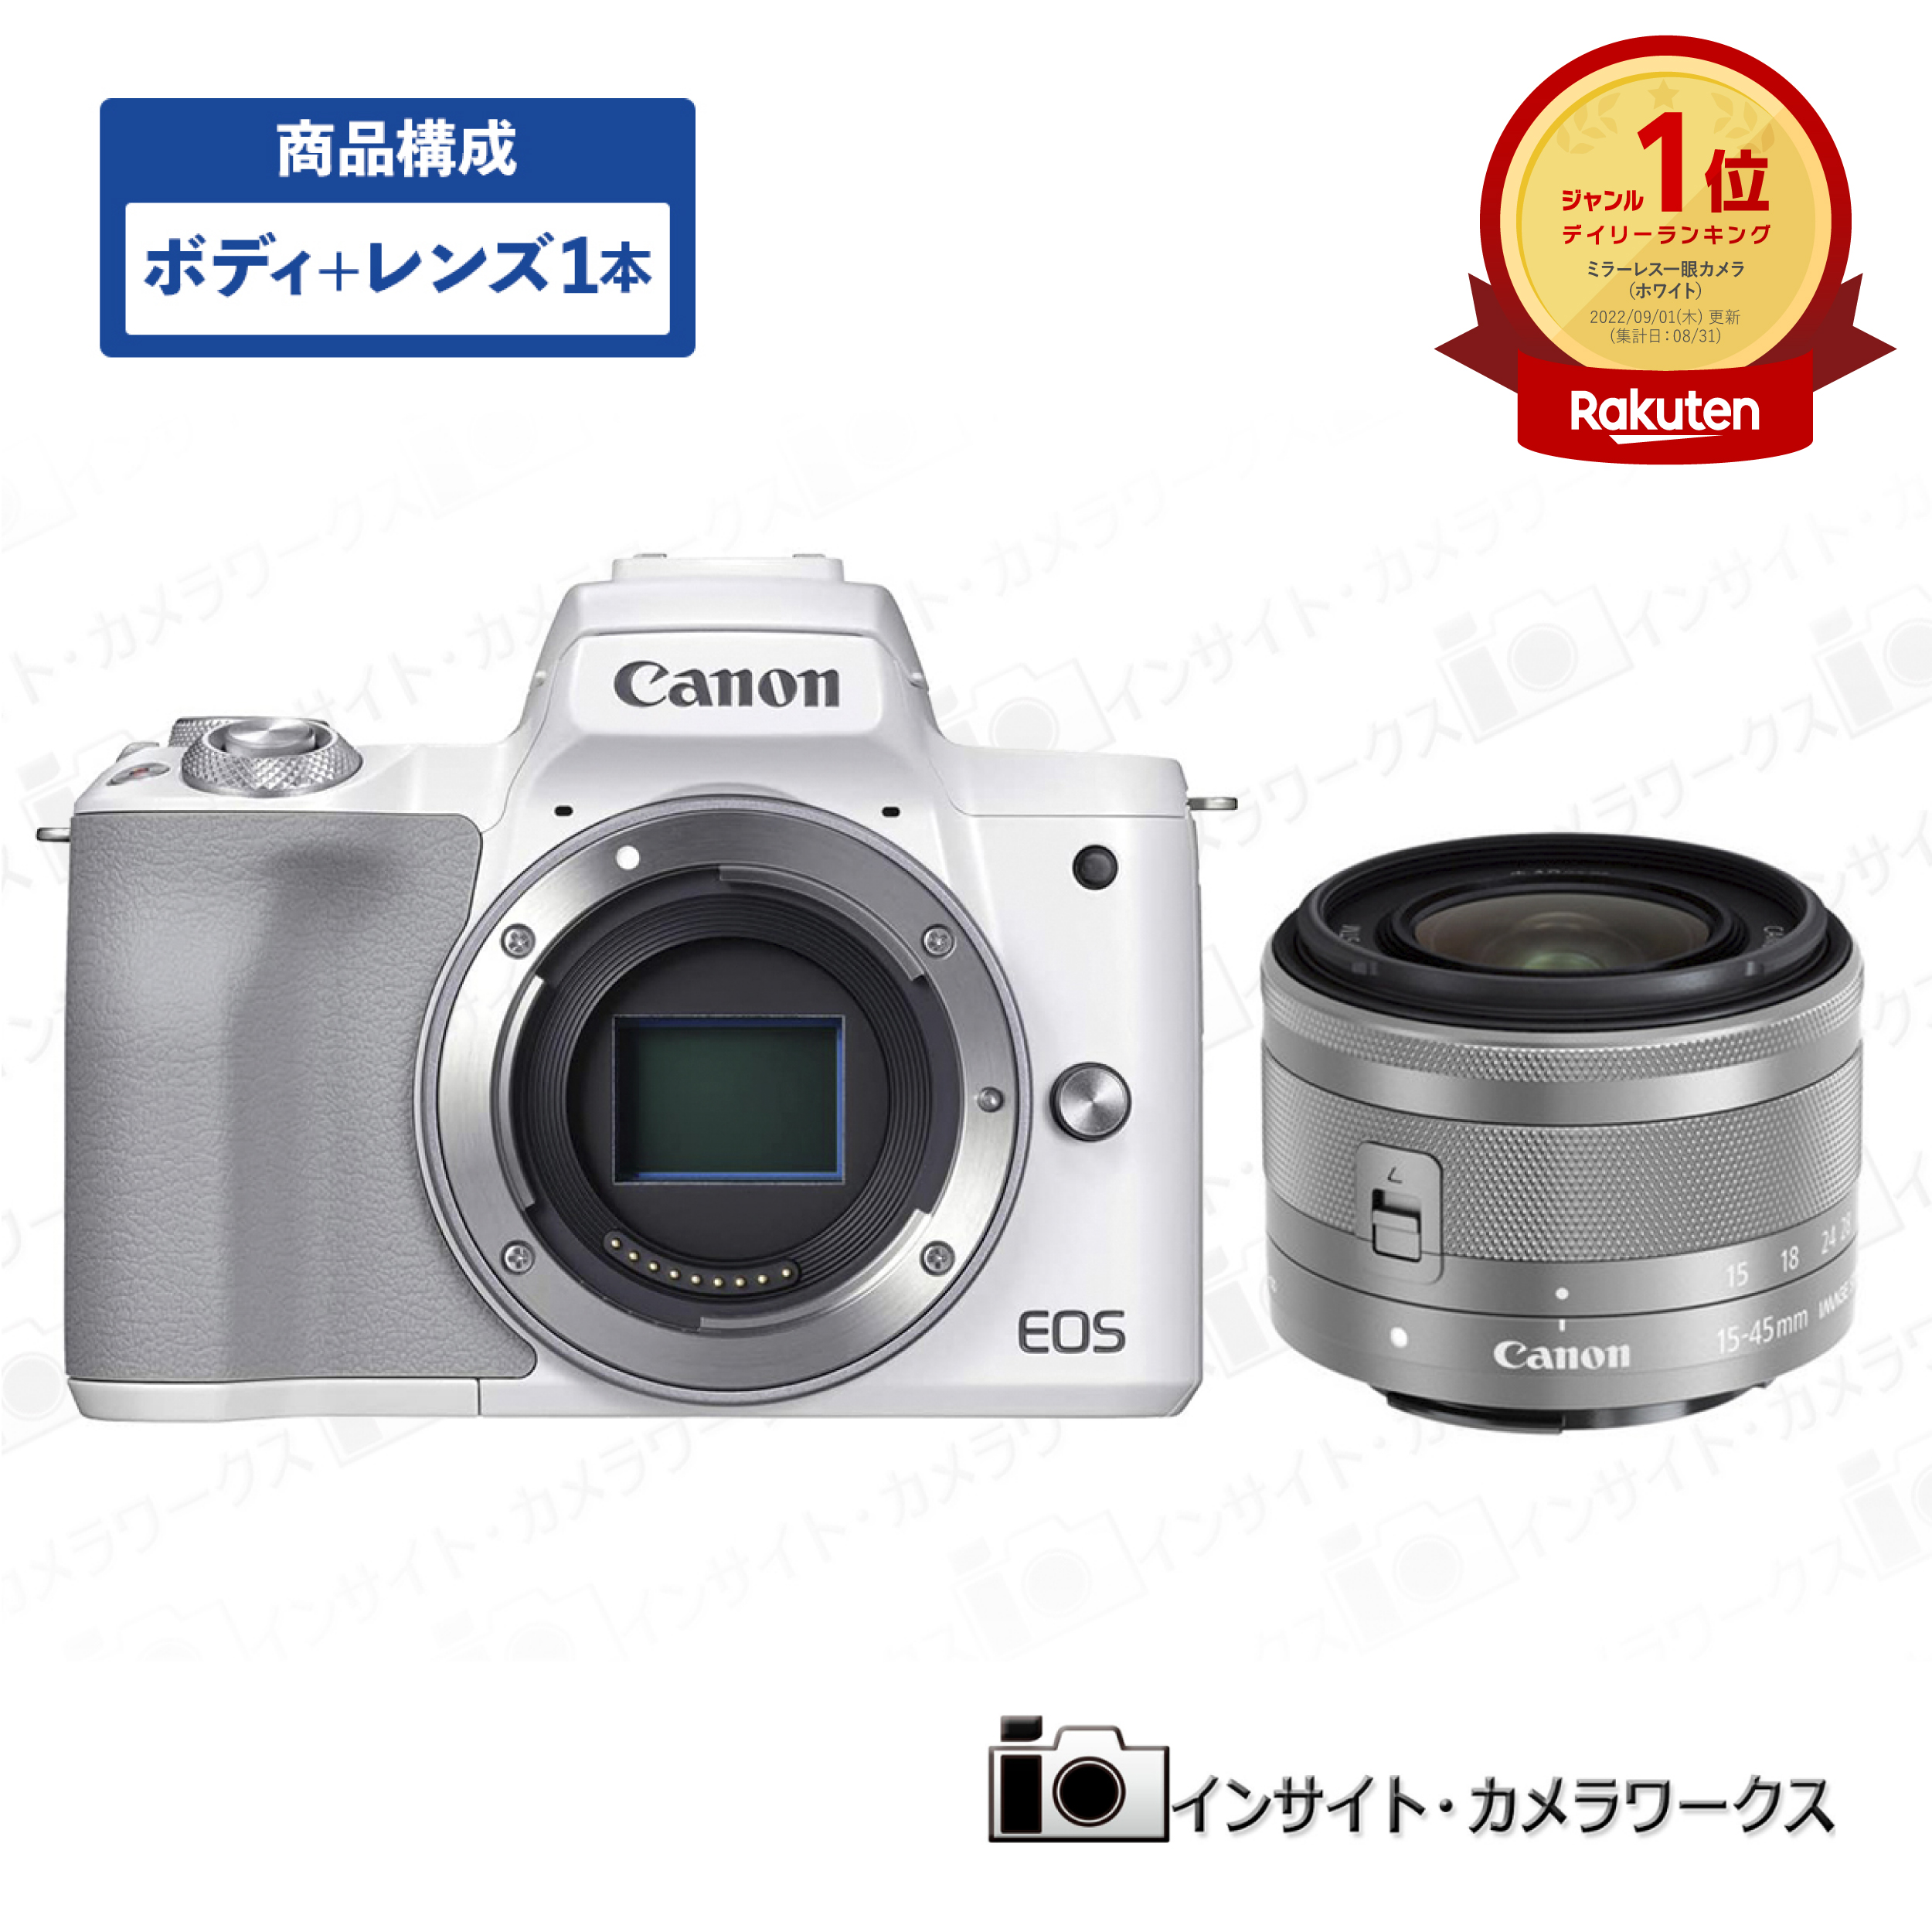 Canon ミラーレス一眼カメラ EOS M2 ボディ(ブラック) EOSM2BK-BODY